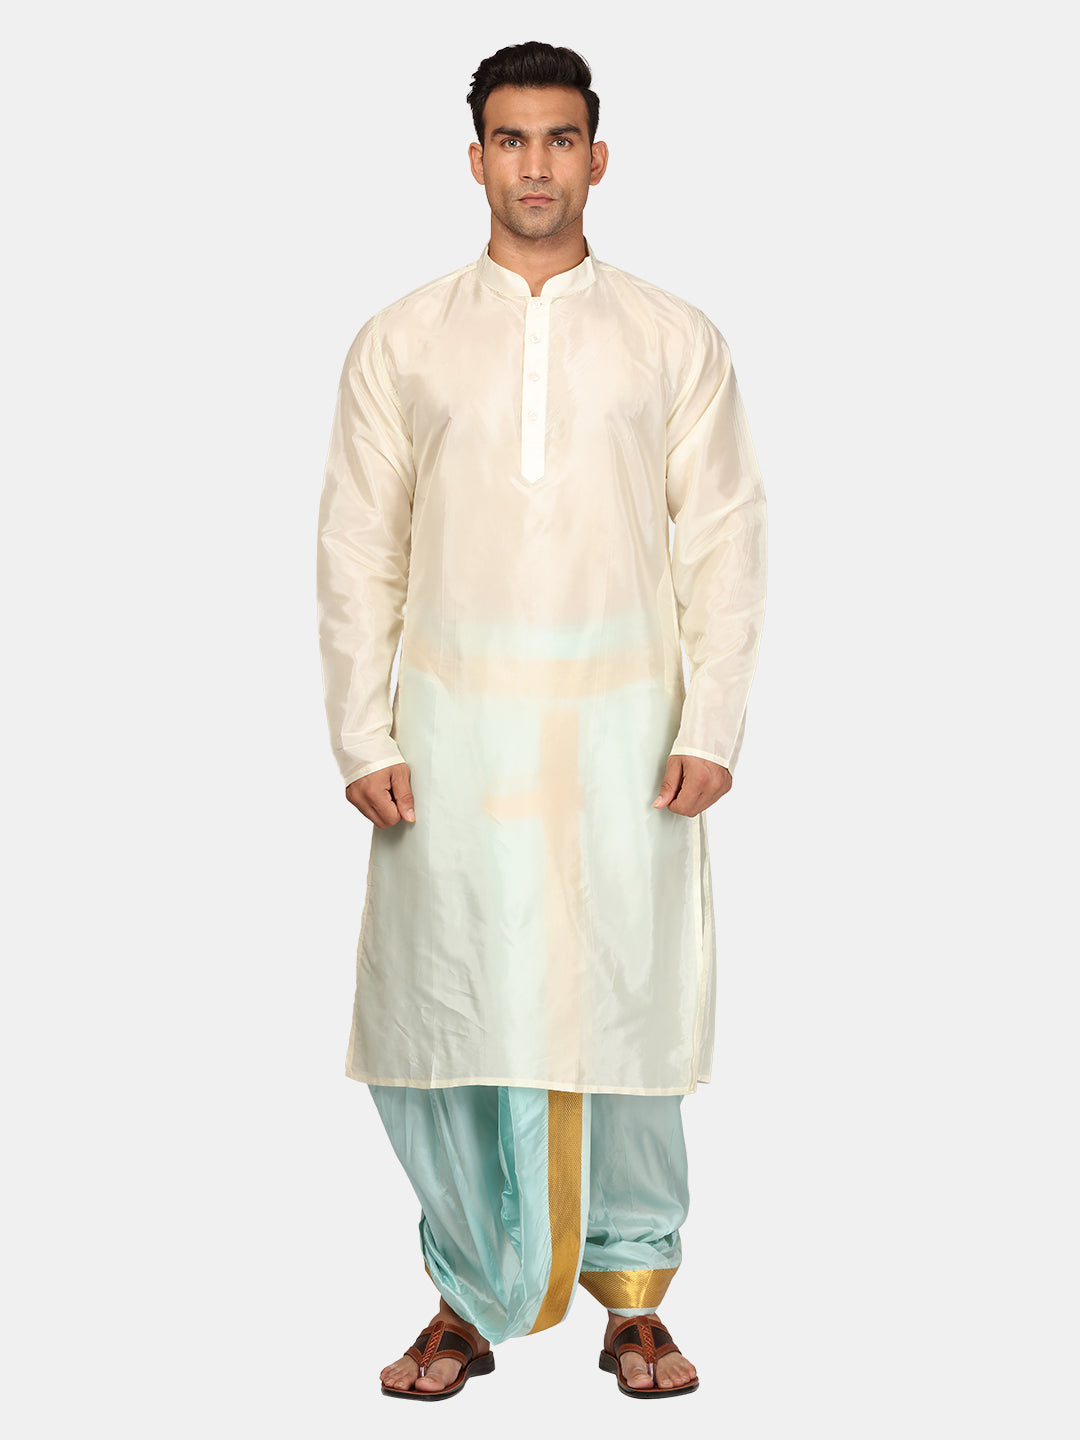 Off White Color Art Silk Wedding Wear Trendy Readymade Dhoti Style Kurta  Pyjama For Men